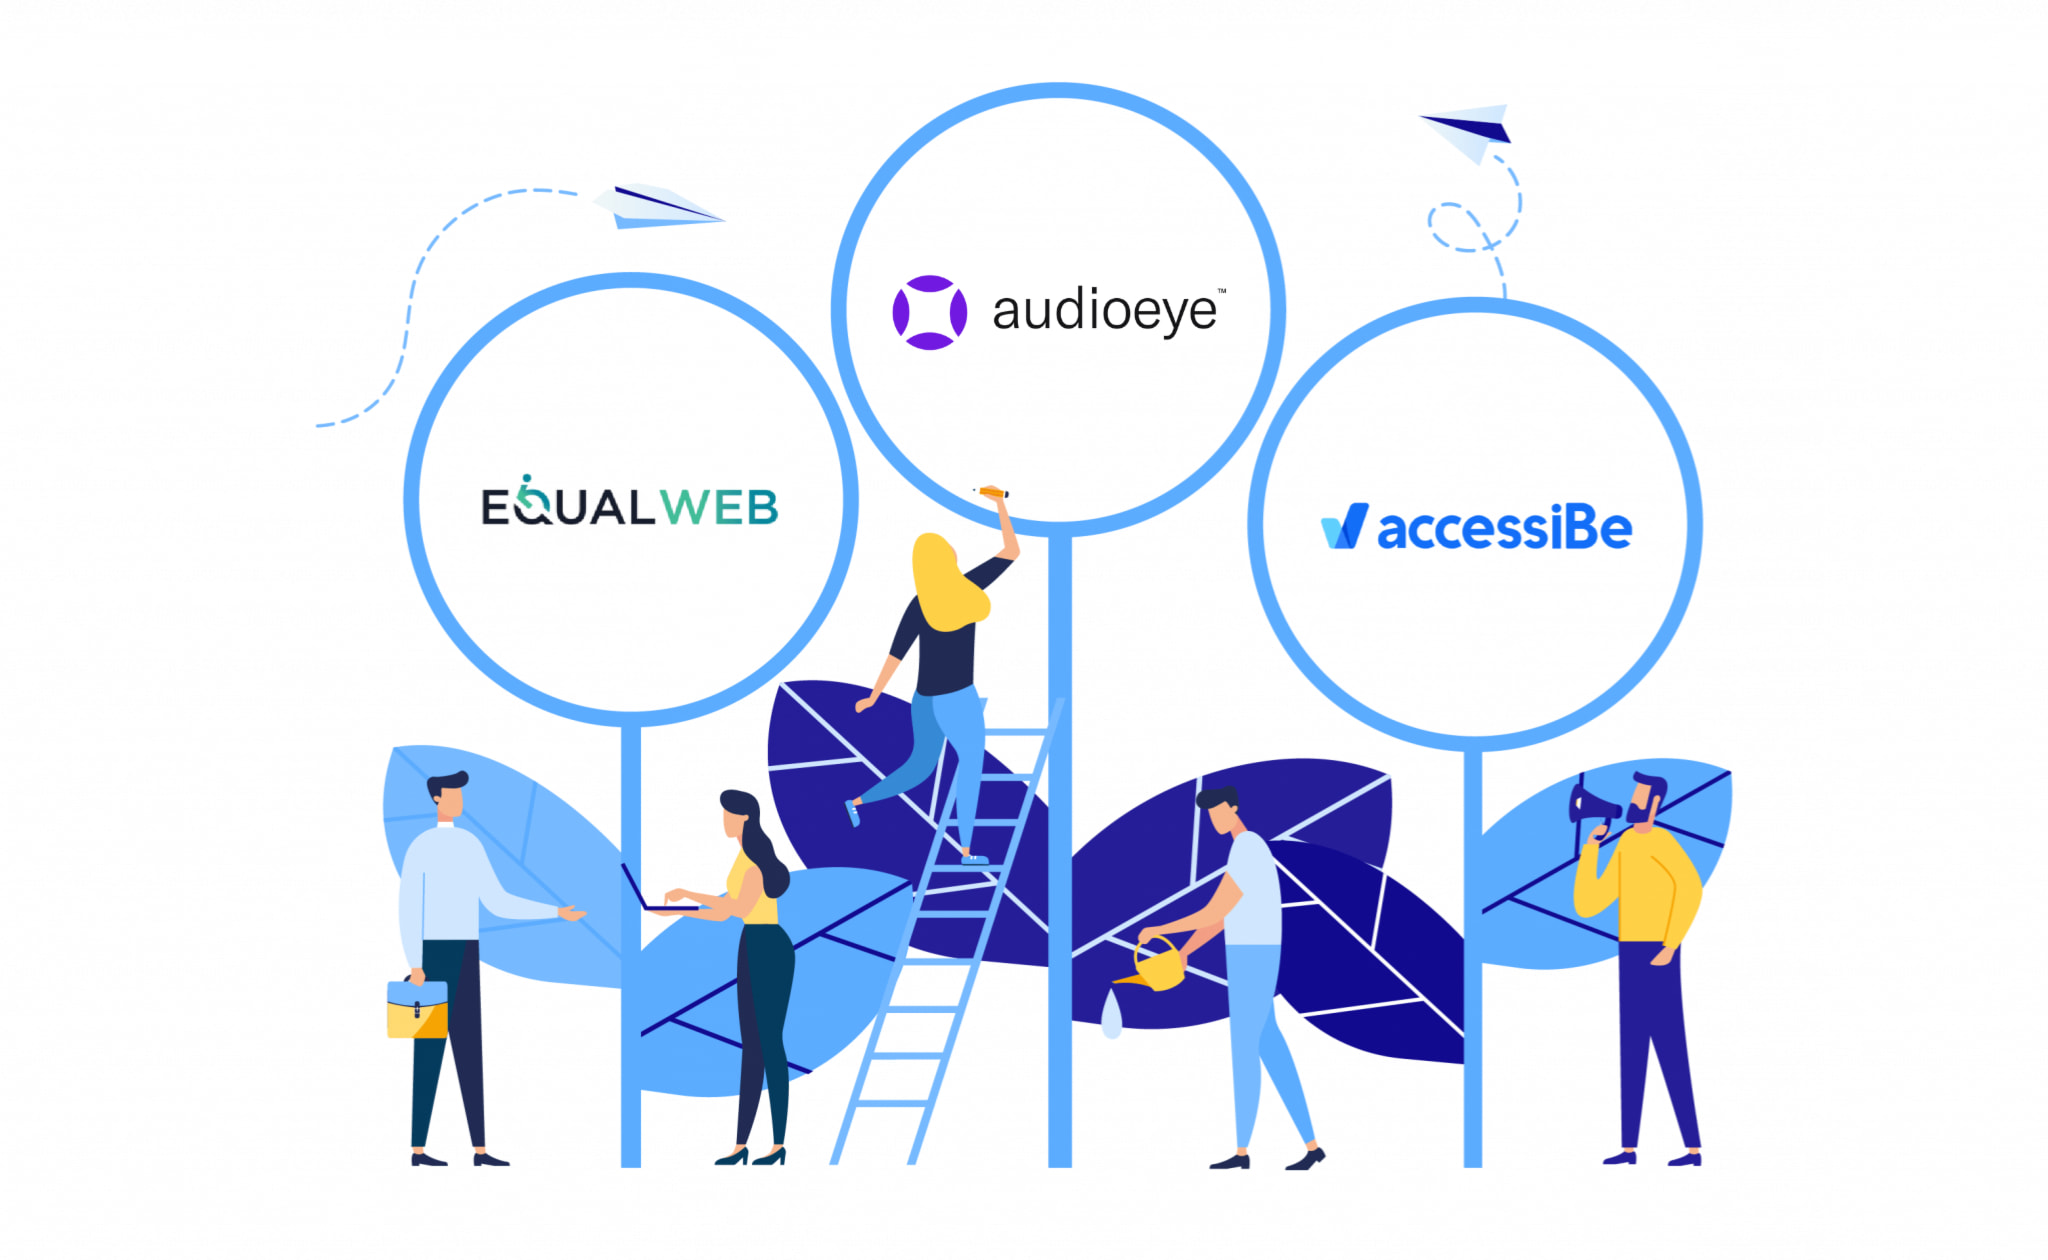 EqualWeb, AudioEye, or AccessiBe comparison